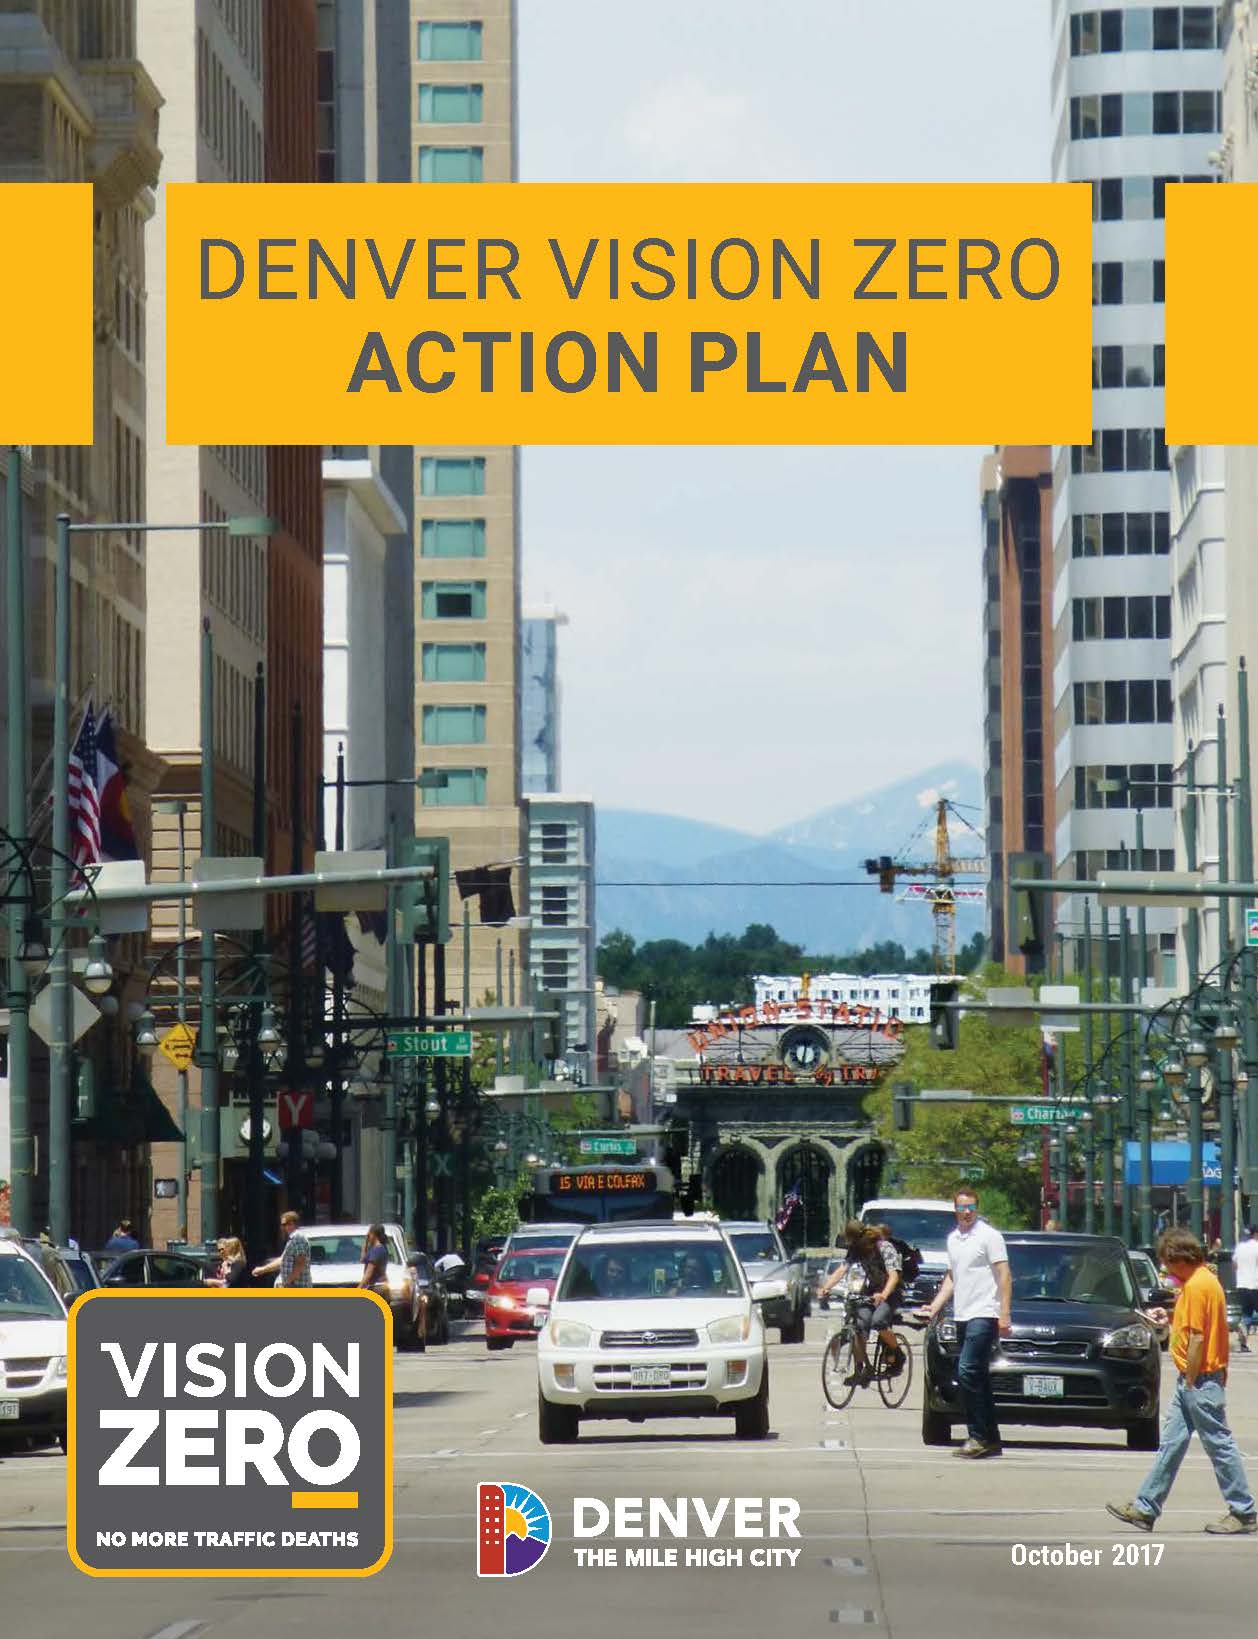 Denver's Vision Zero Action Plan